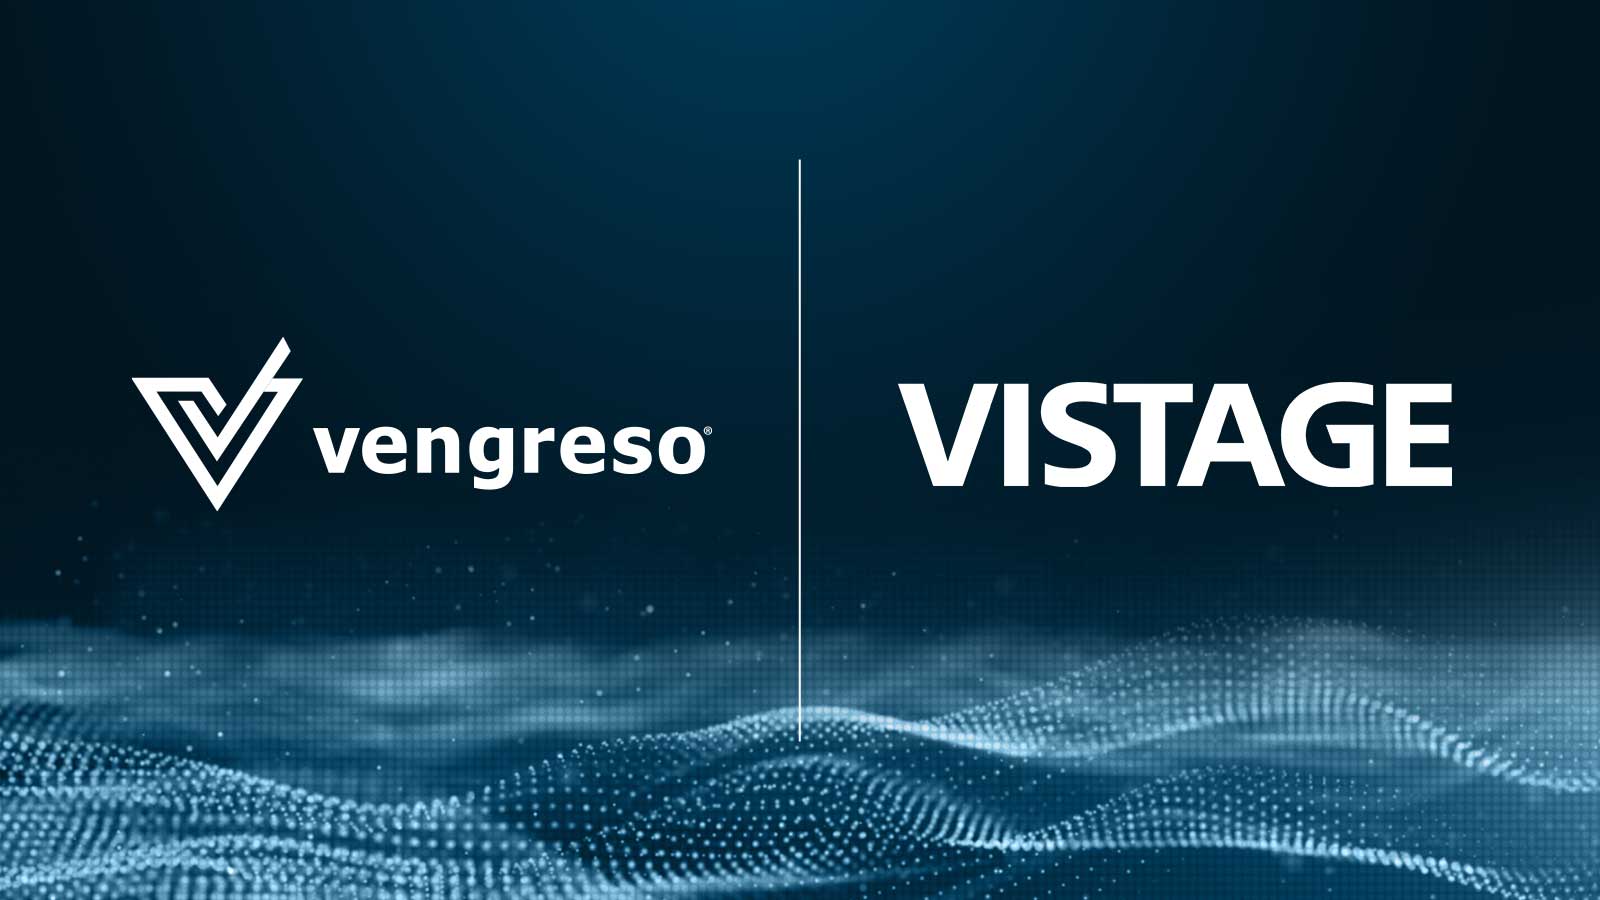 Vistage selects Vengreso for LinkedIn sales training.